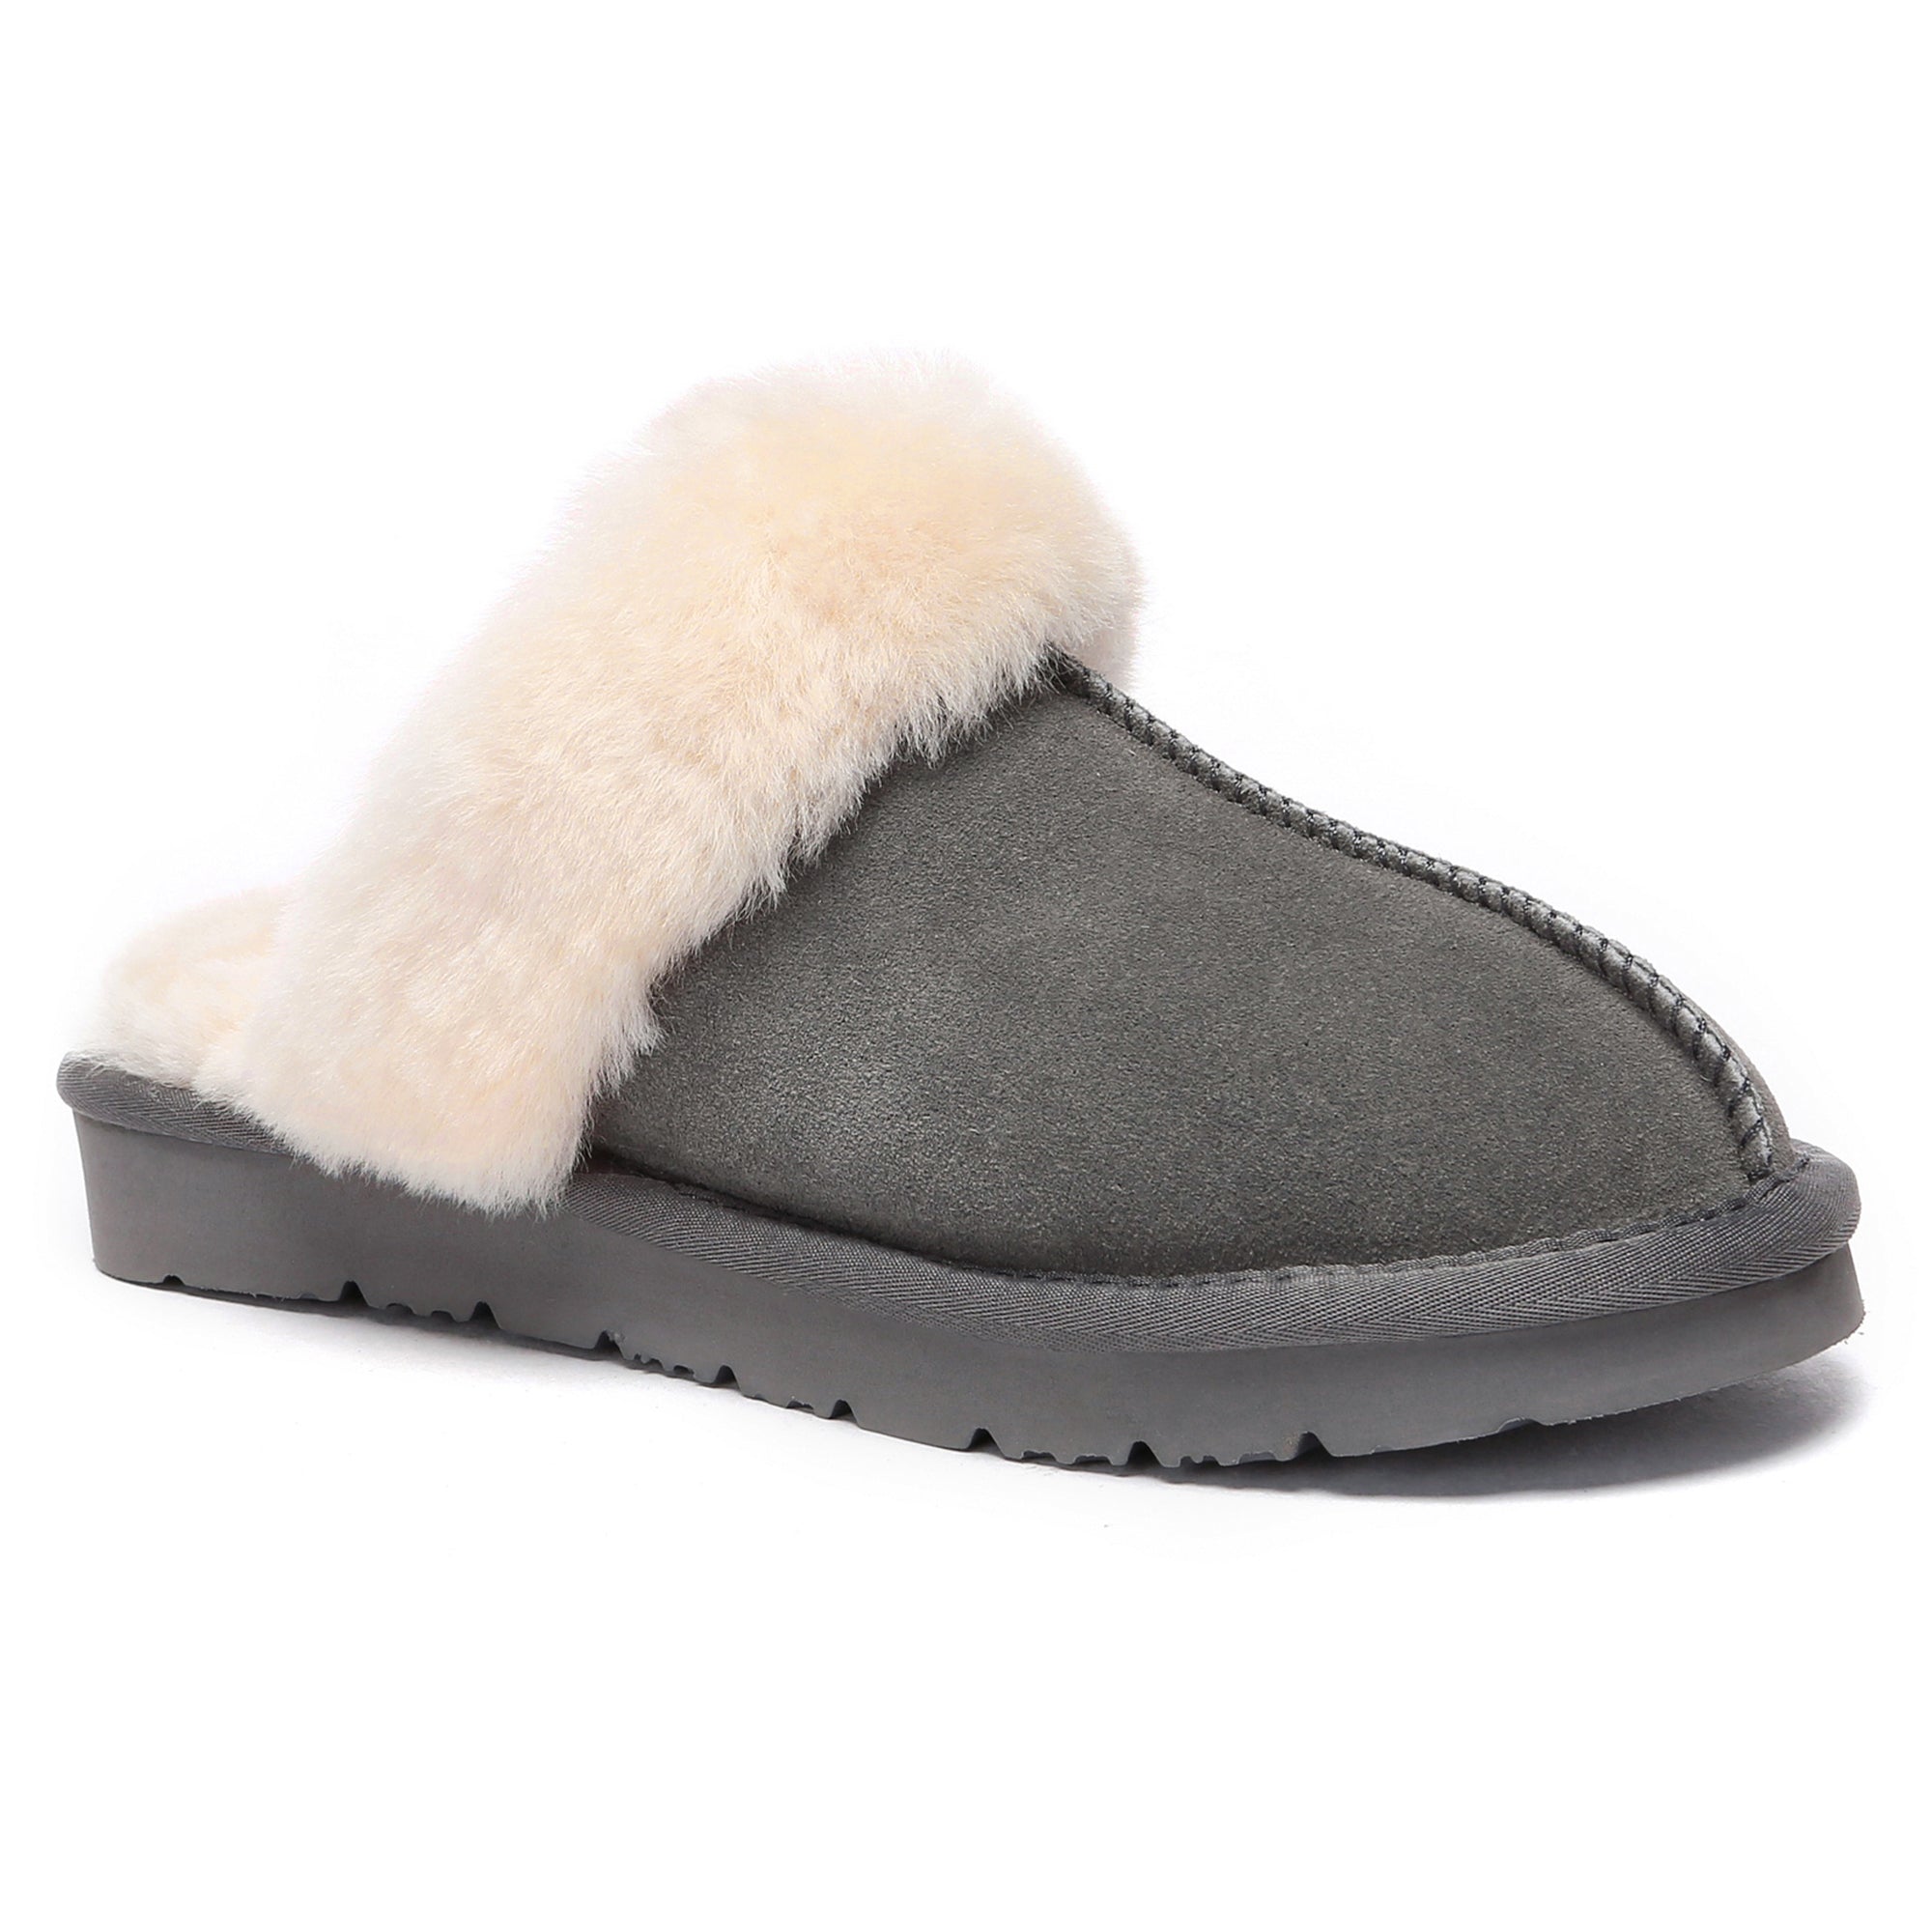 Muffin Sheepskin Winter Slippers